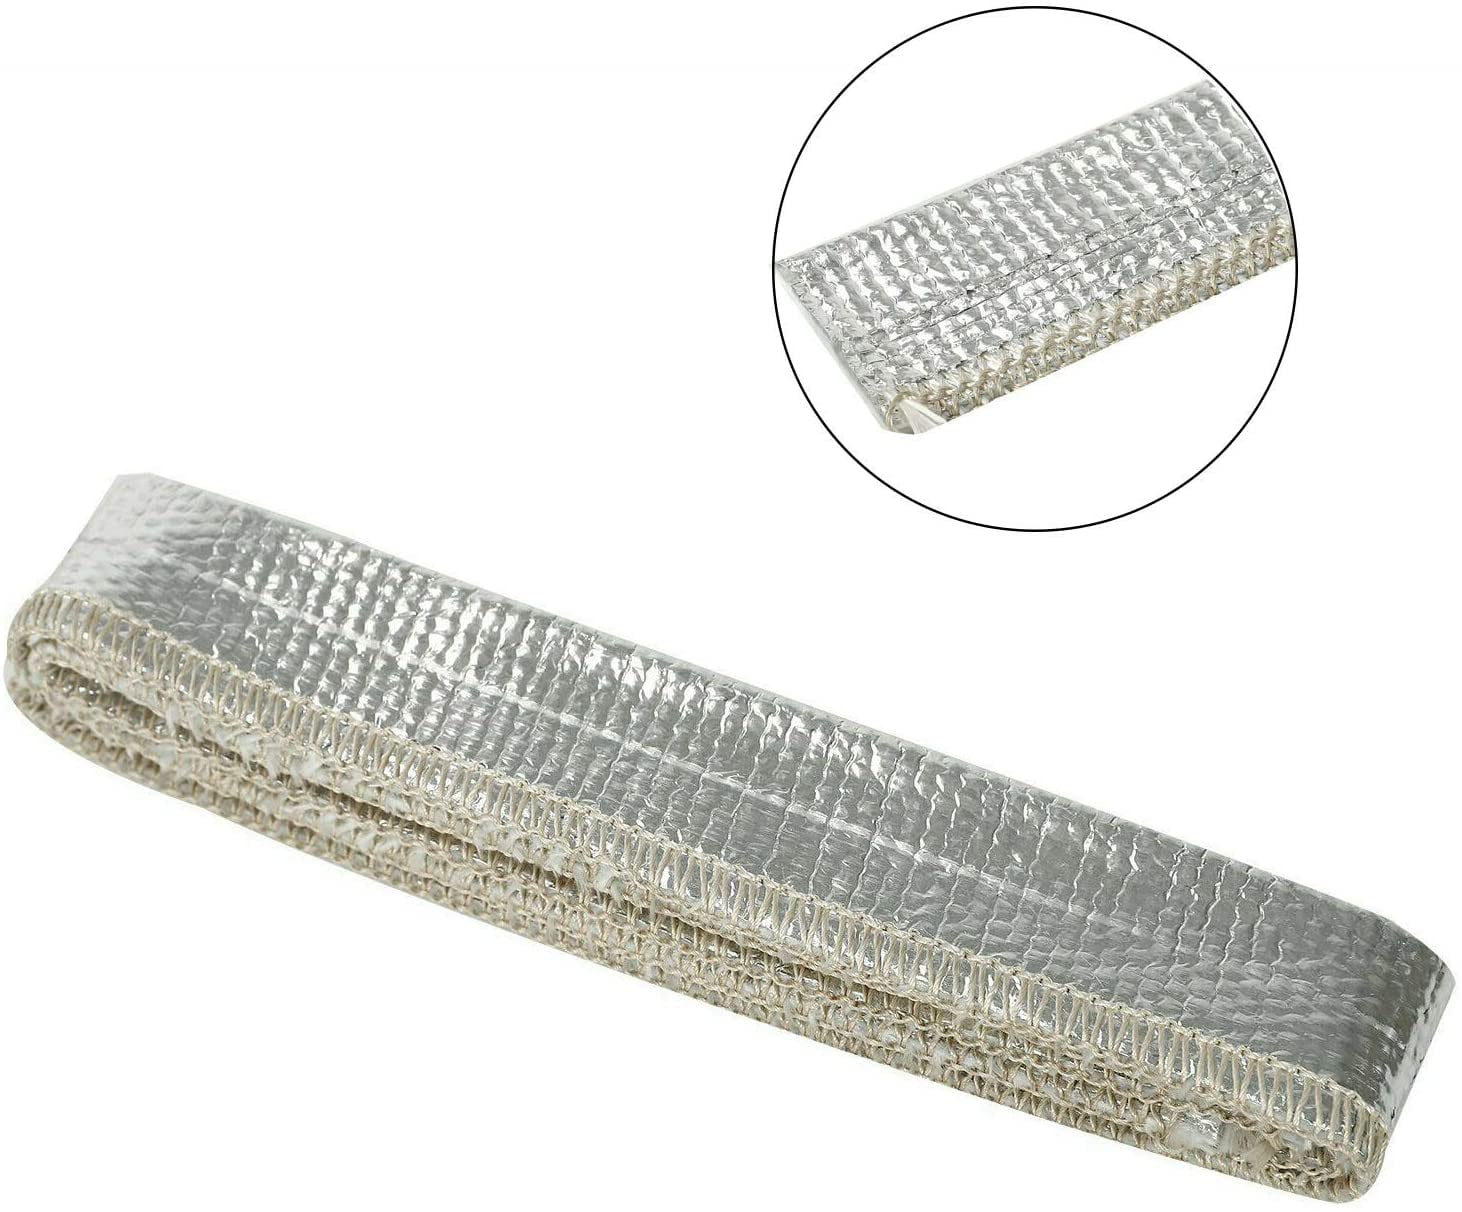 Aluminized Metallic Heat Shield Sleeve Insulated Wire Hose Cover Loom 1/2" 3ft 